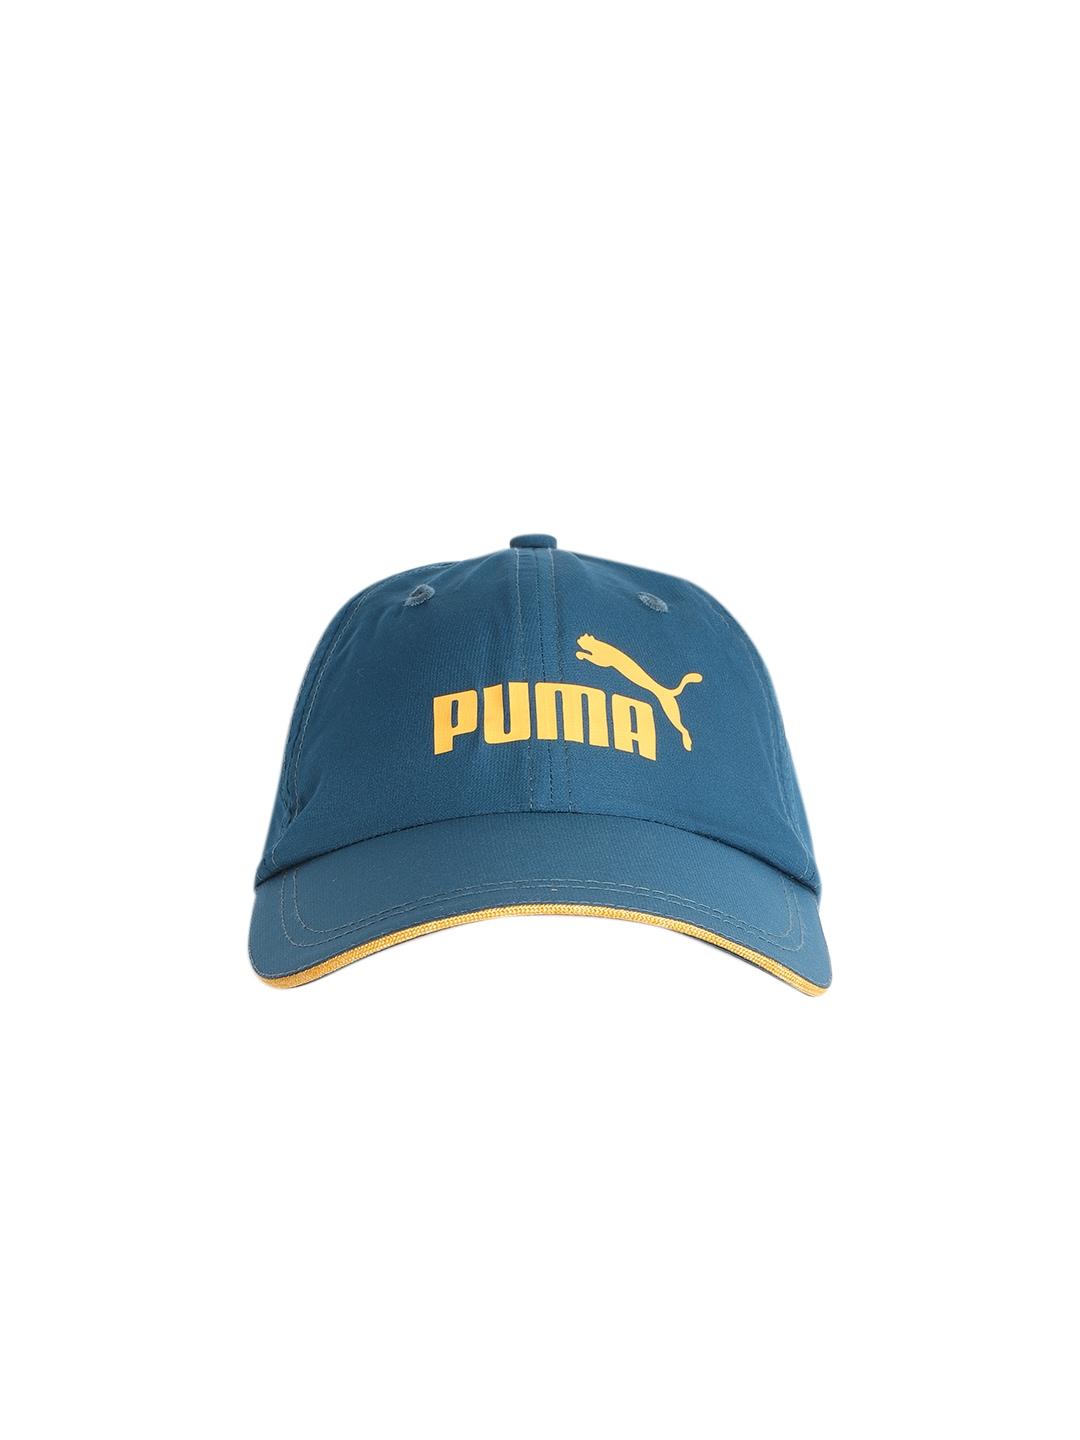 puma-unisex-teal-blue-&-mustard-yellow-performance-visor-brand-logo-print-sports-cap